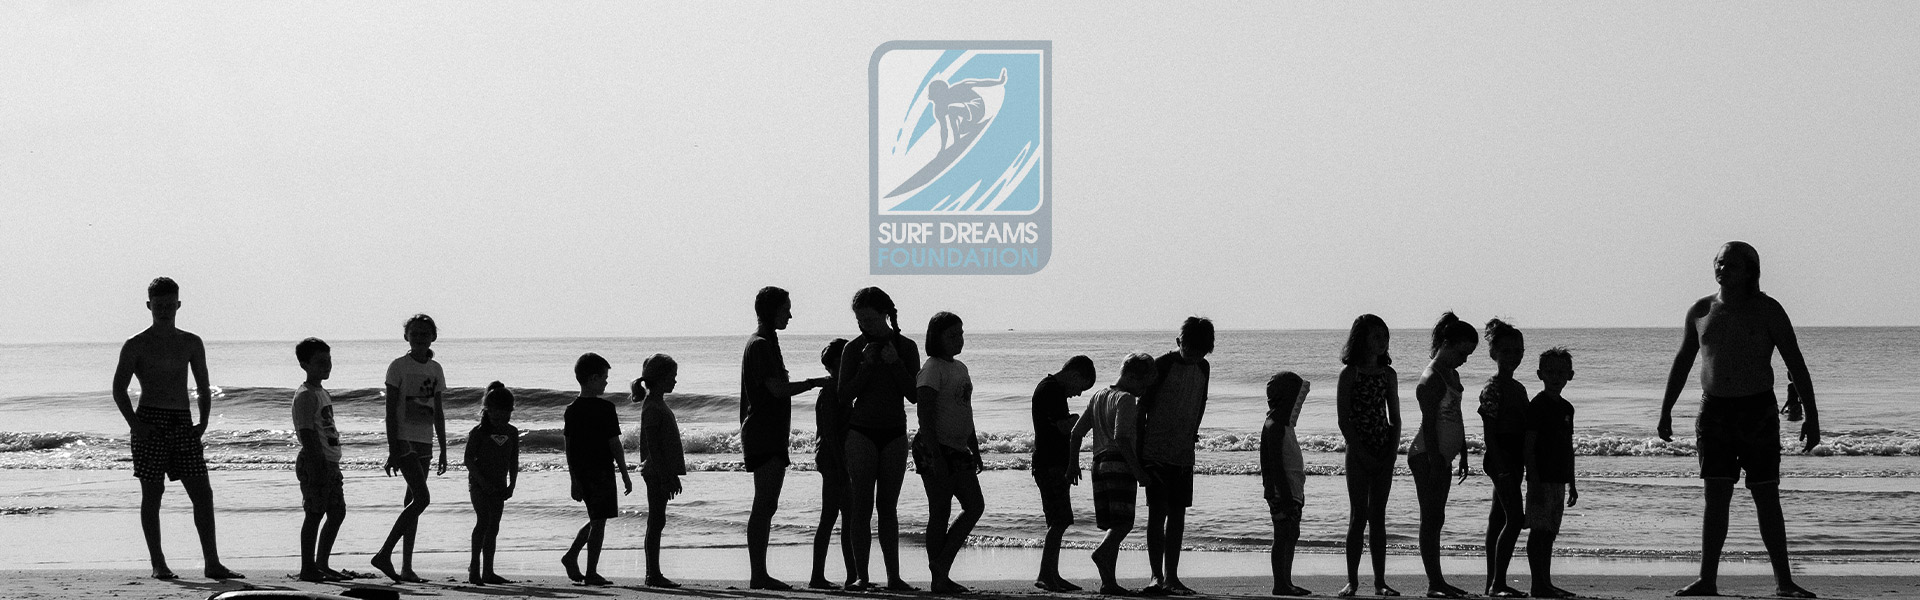 Contact Surf Dreams Foundation